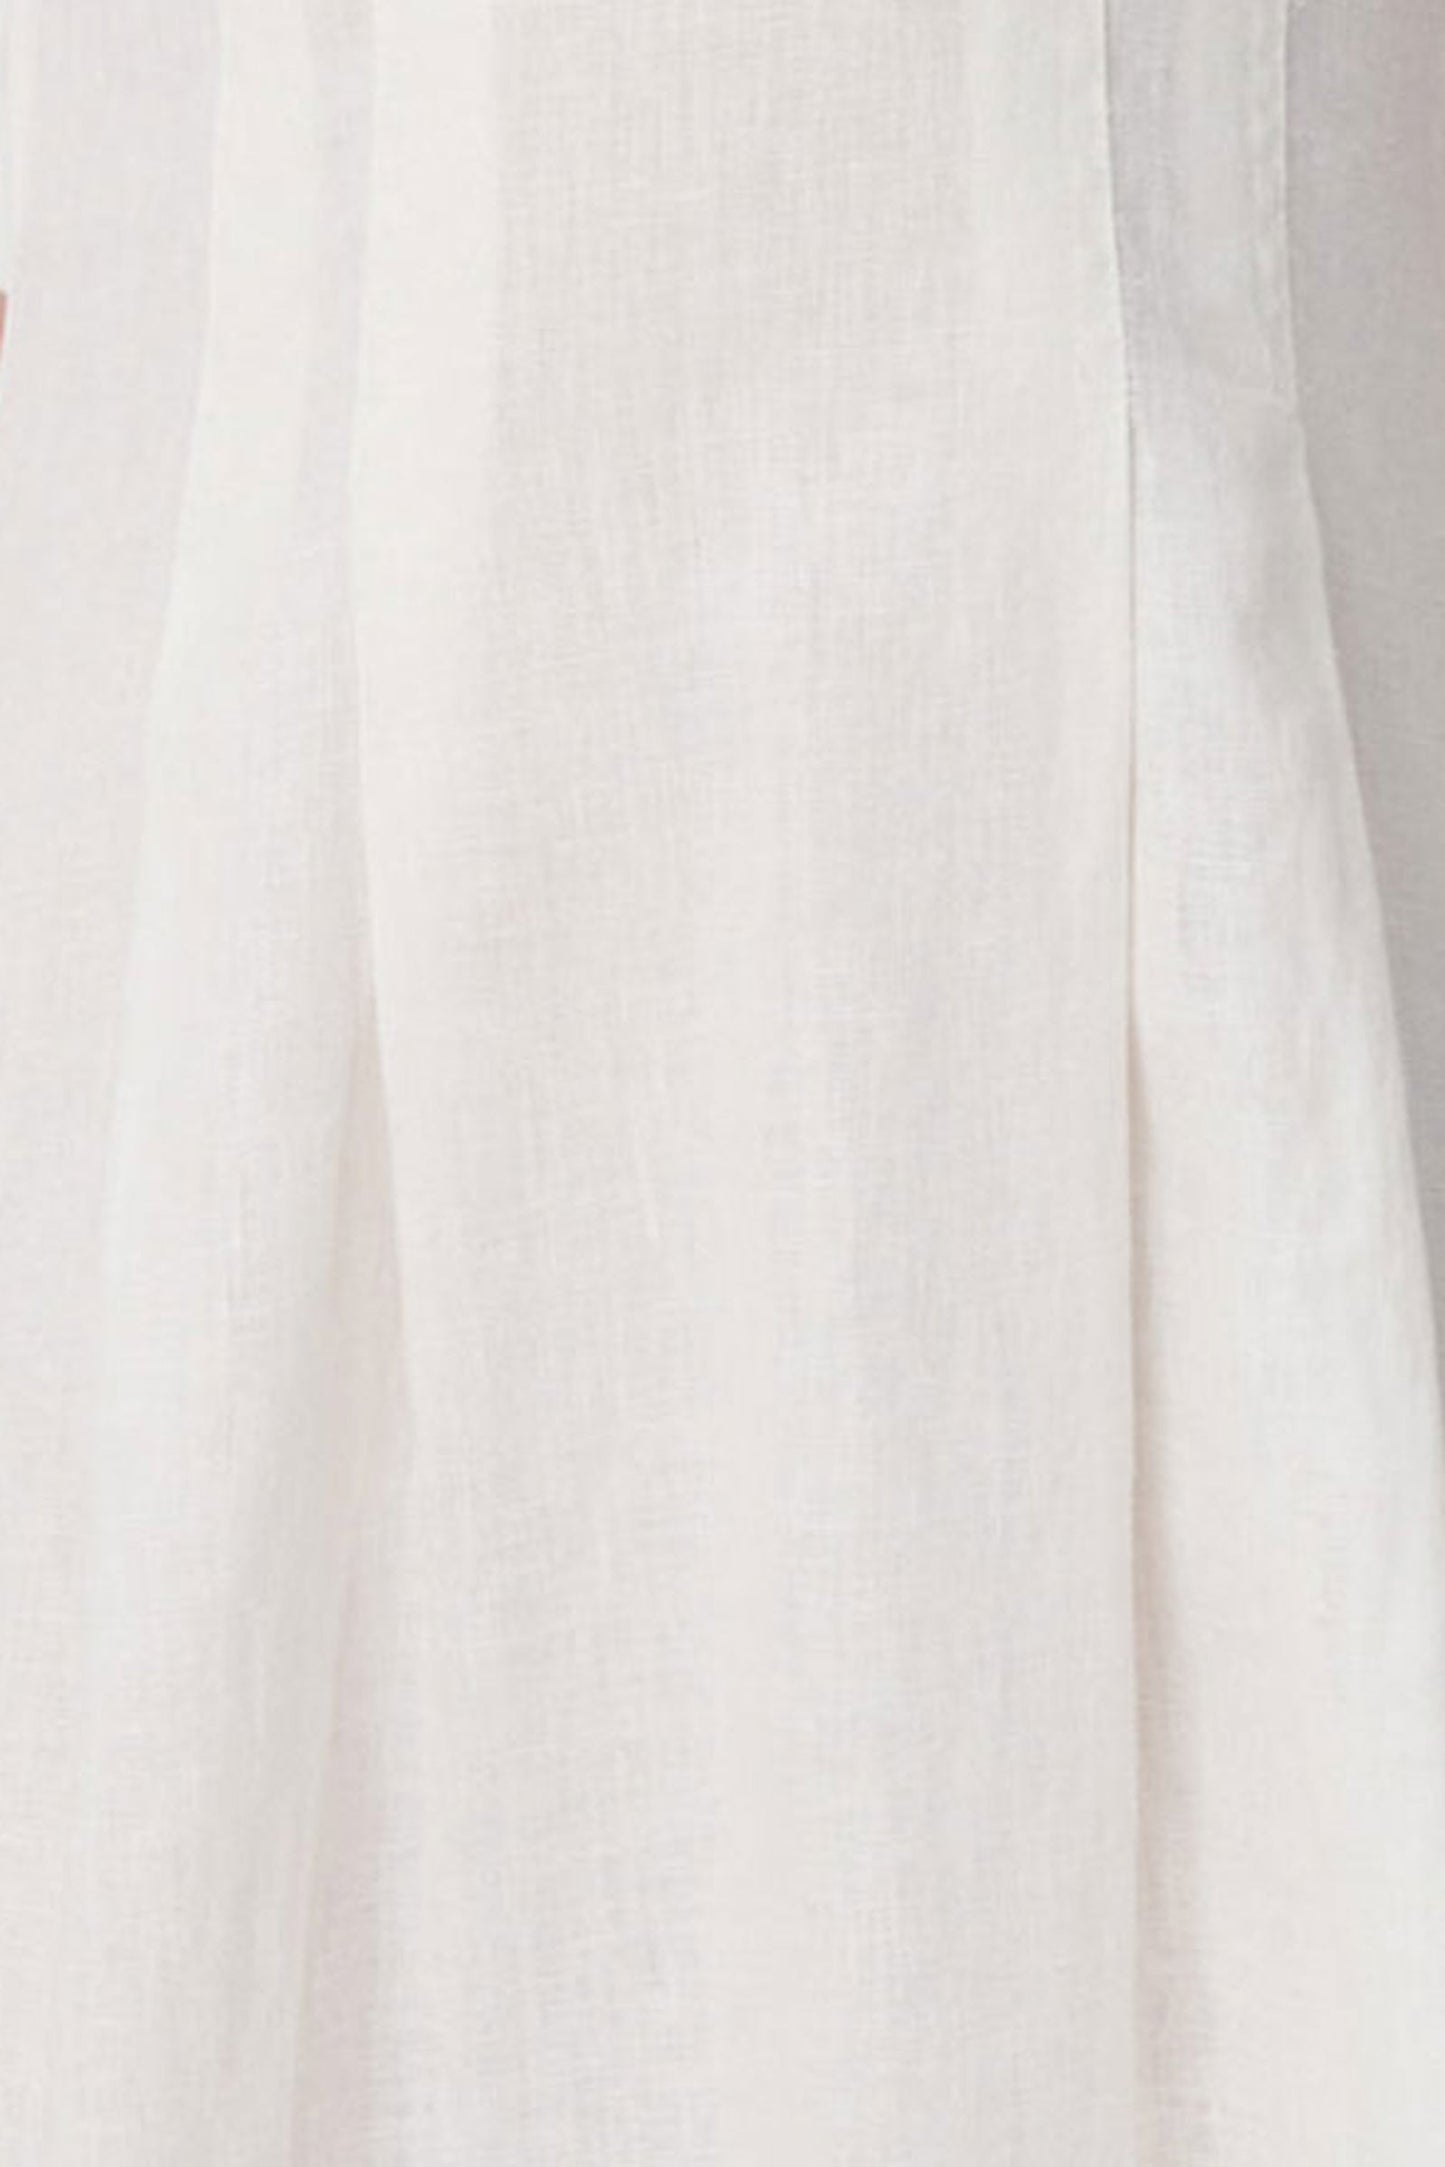 mysite Dress Anica Linen Mini Dress Bone